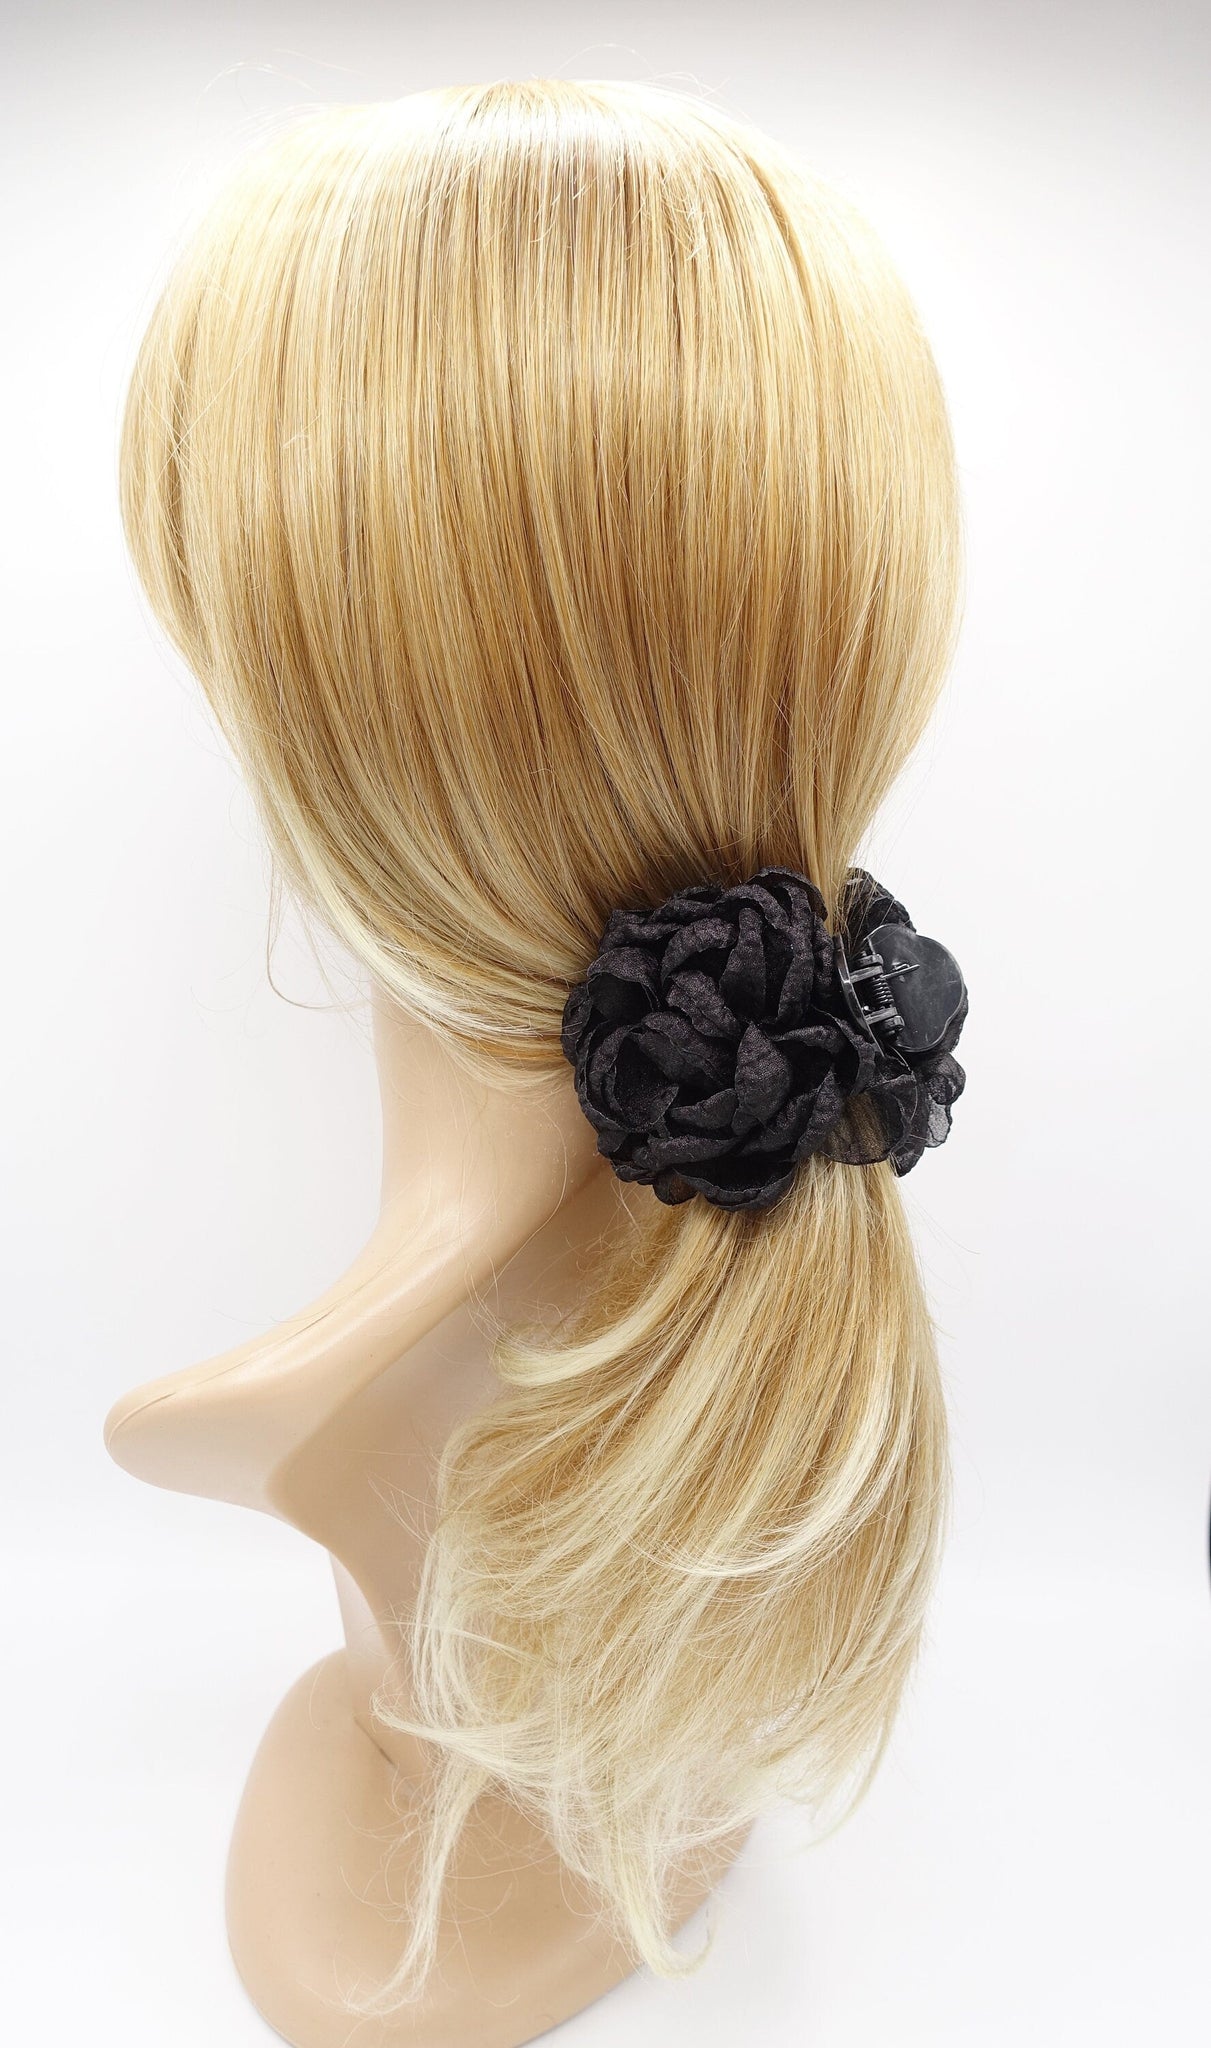 veryshine.com Hair Claw flower hair claw, organza petal clip, flower 3 Prong Claw Clip Women Hair Accessory